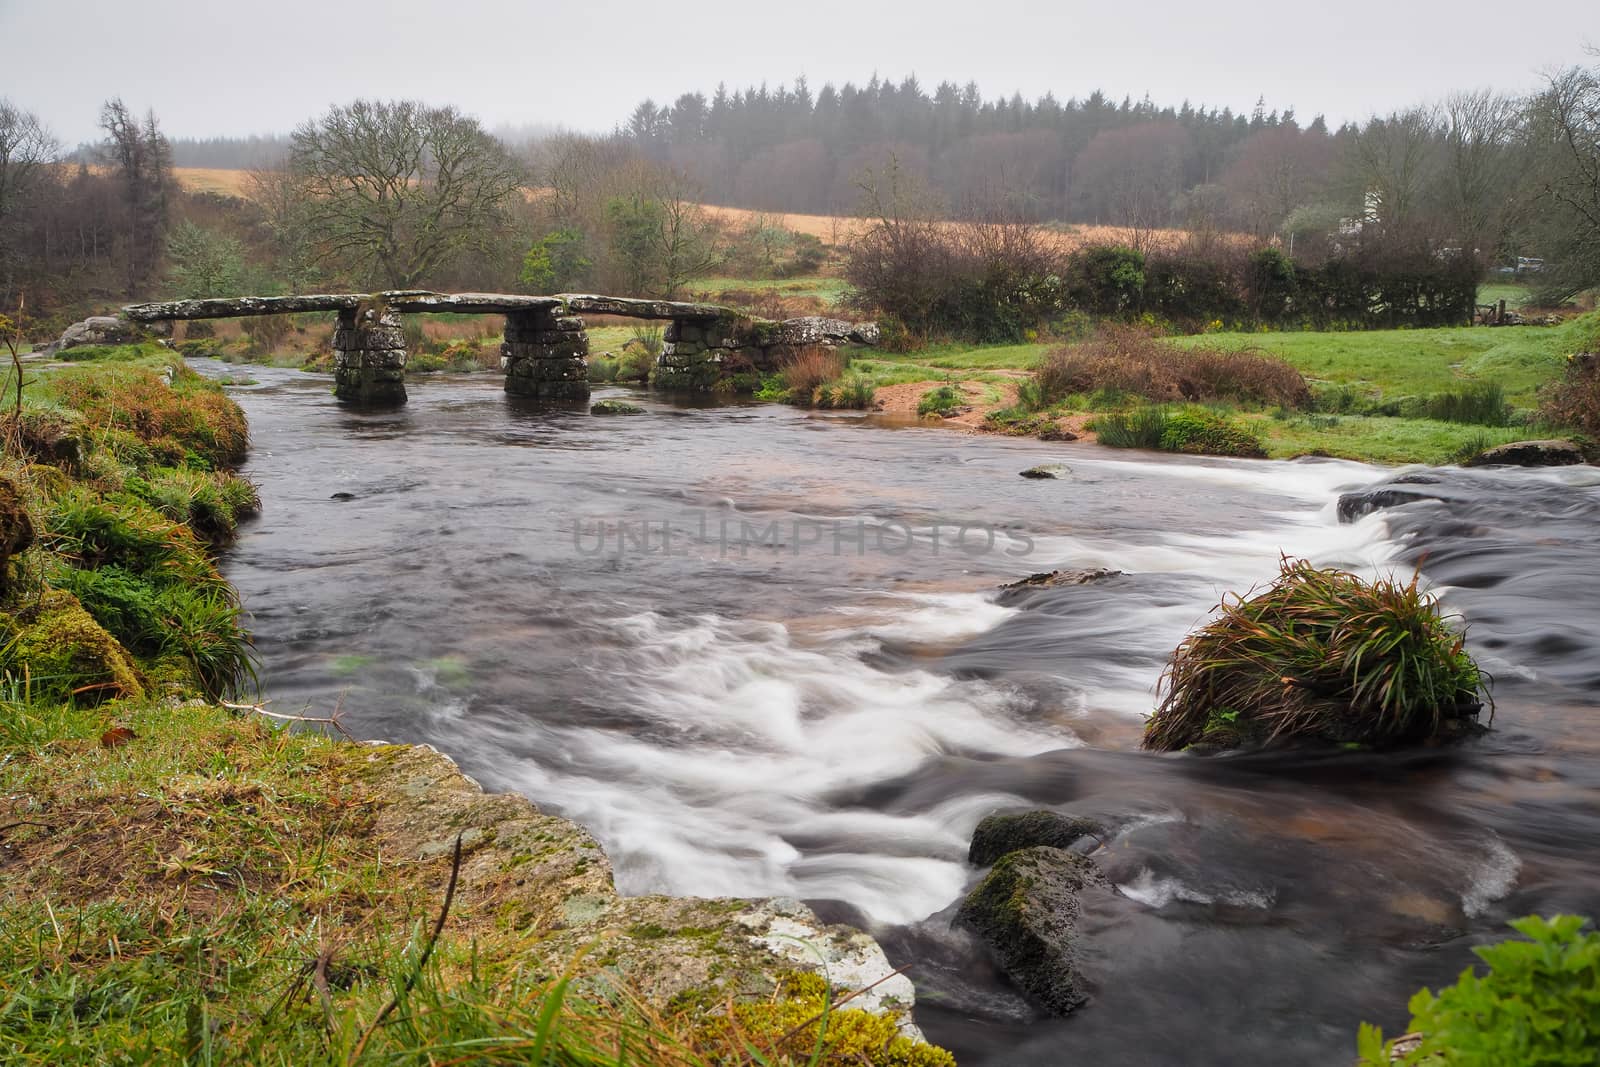 Fast flowing water under the 13th century stone clapper bridge originally built to enable pack horses to cross the East Dart River at Postbridge, Dartmoor National Park, Devon, UK